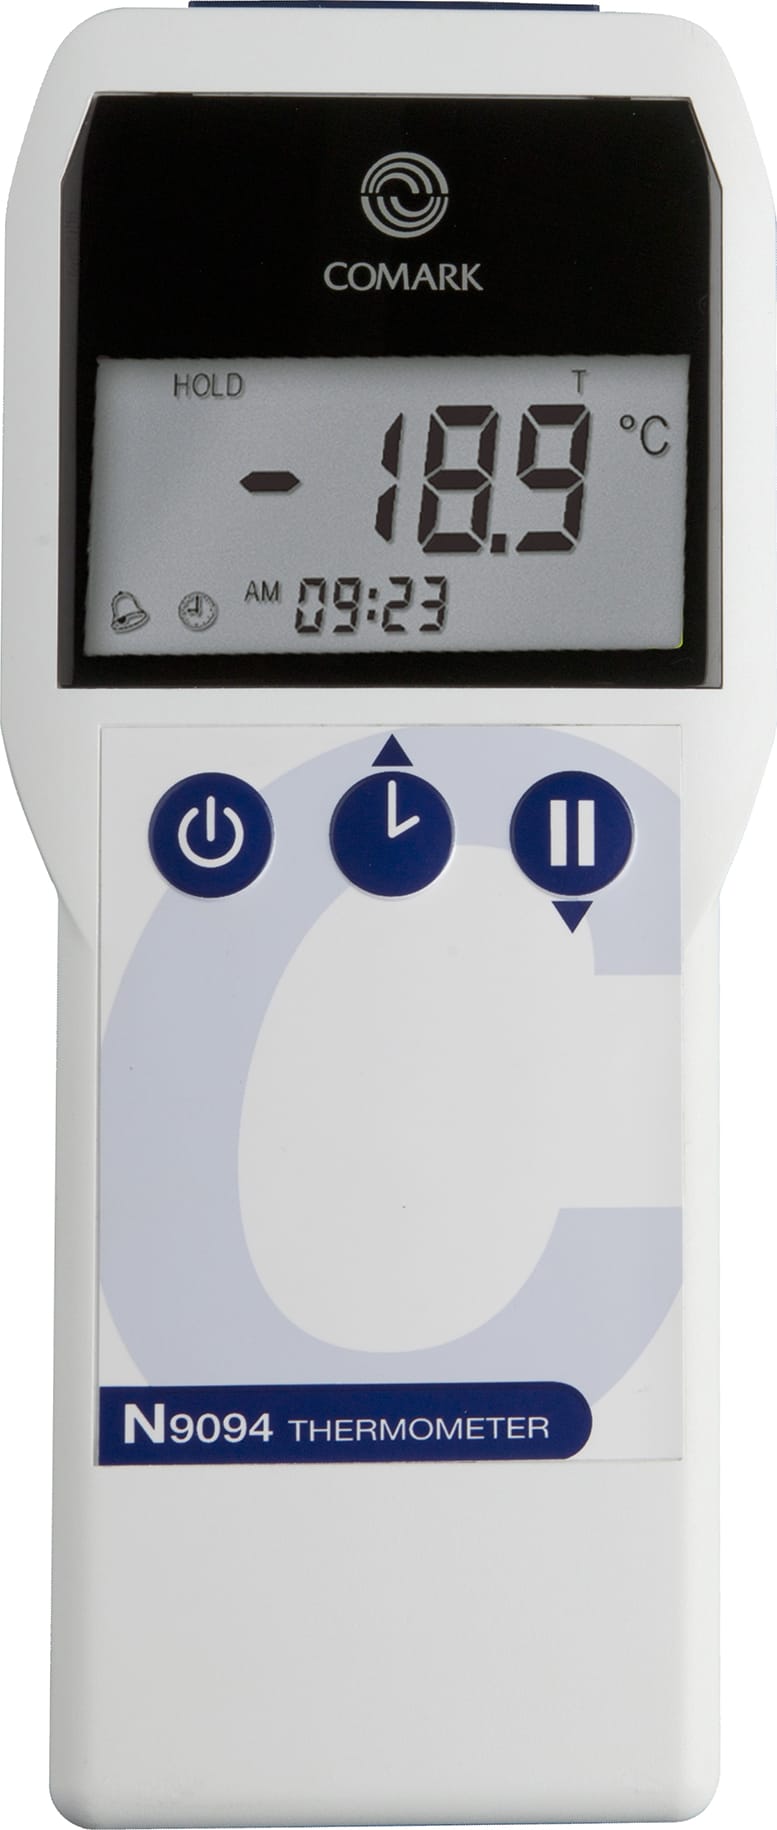 Thermomètre étanche IP67 Comark N9094 - Distrame Thermomètres